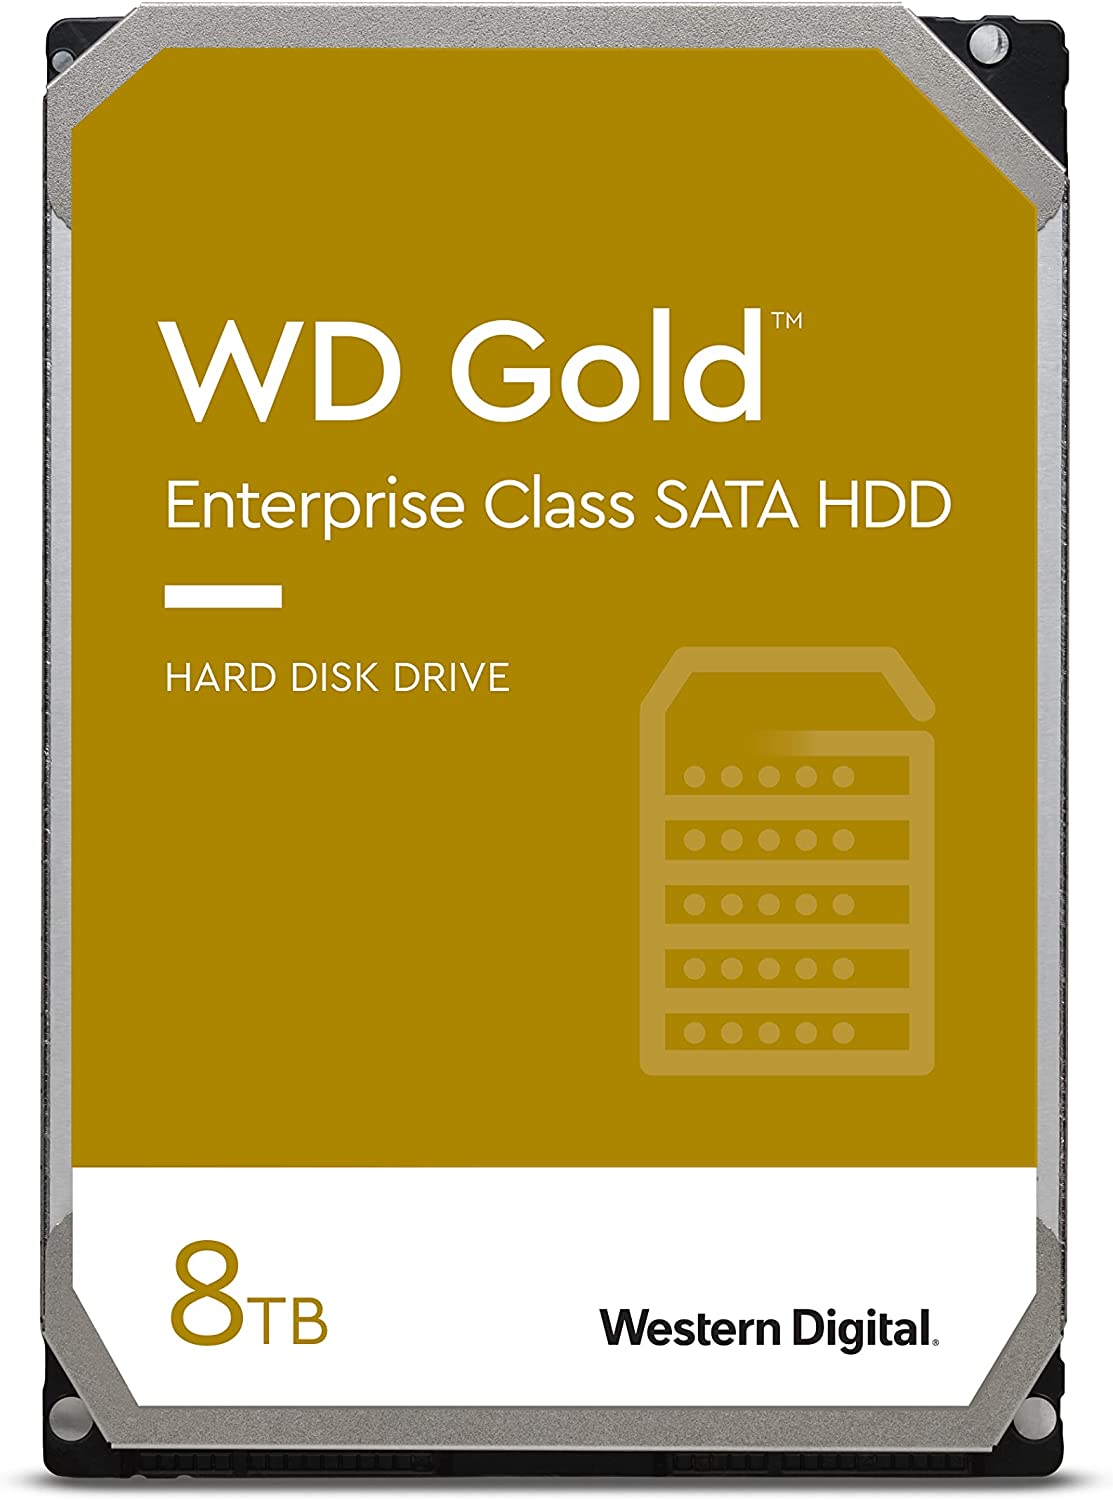 Storage - Internal Disk/Western Digital: Western, Digital, 8TB, WD, Gold, Enterprise, Class, Internal, Hard, Drive, -, 3.5, SATA, 6Gb/s, 512e, -Speed:, 7, 200RPM, -, 5, Years, Limi, 